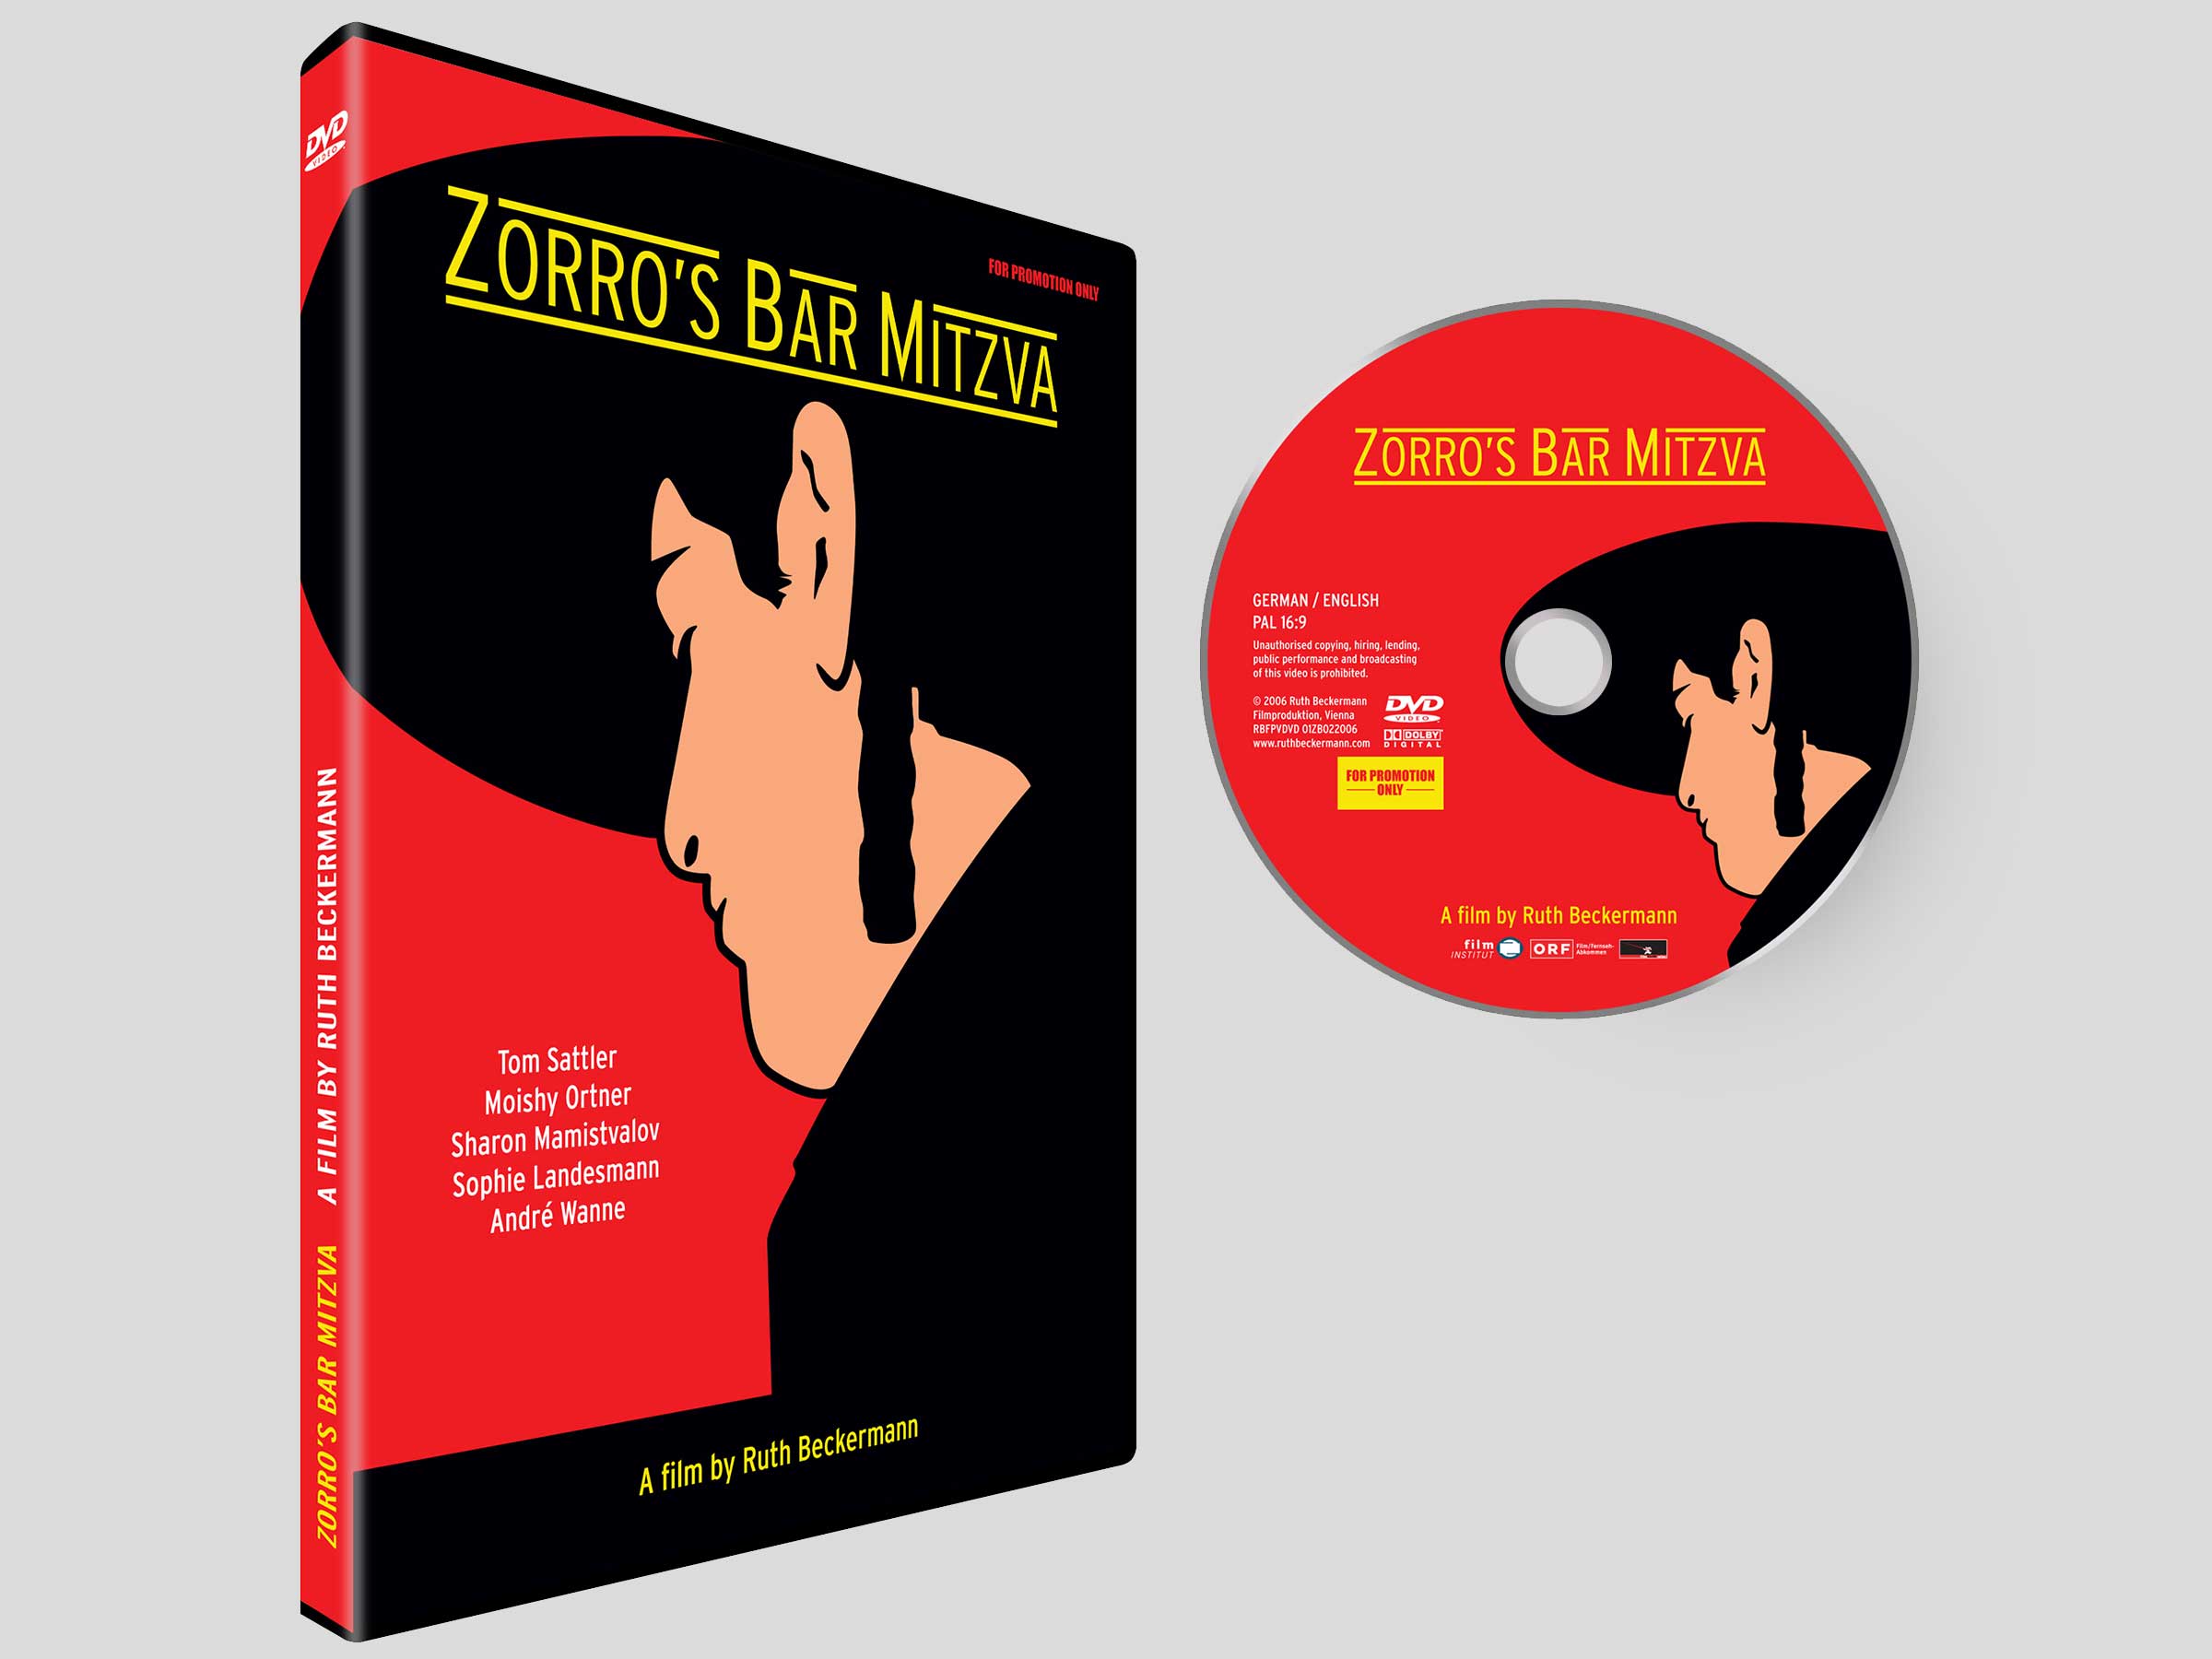 zorros-bar-mizwa-filmladen-ruth-beckermann-DVD